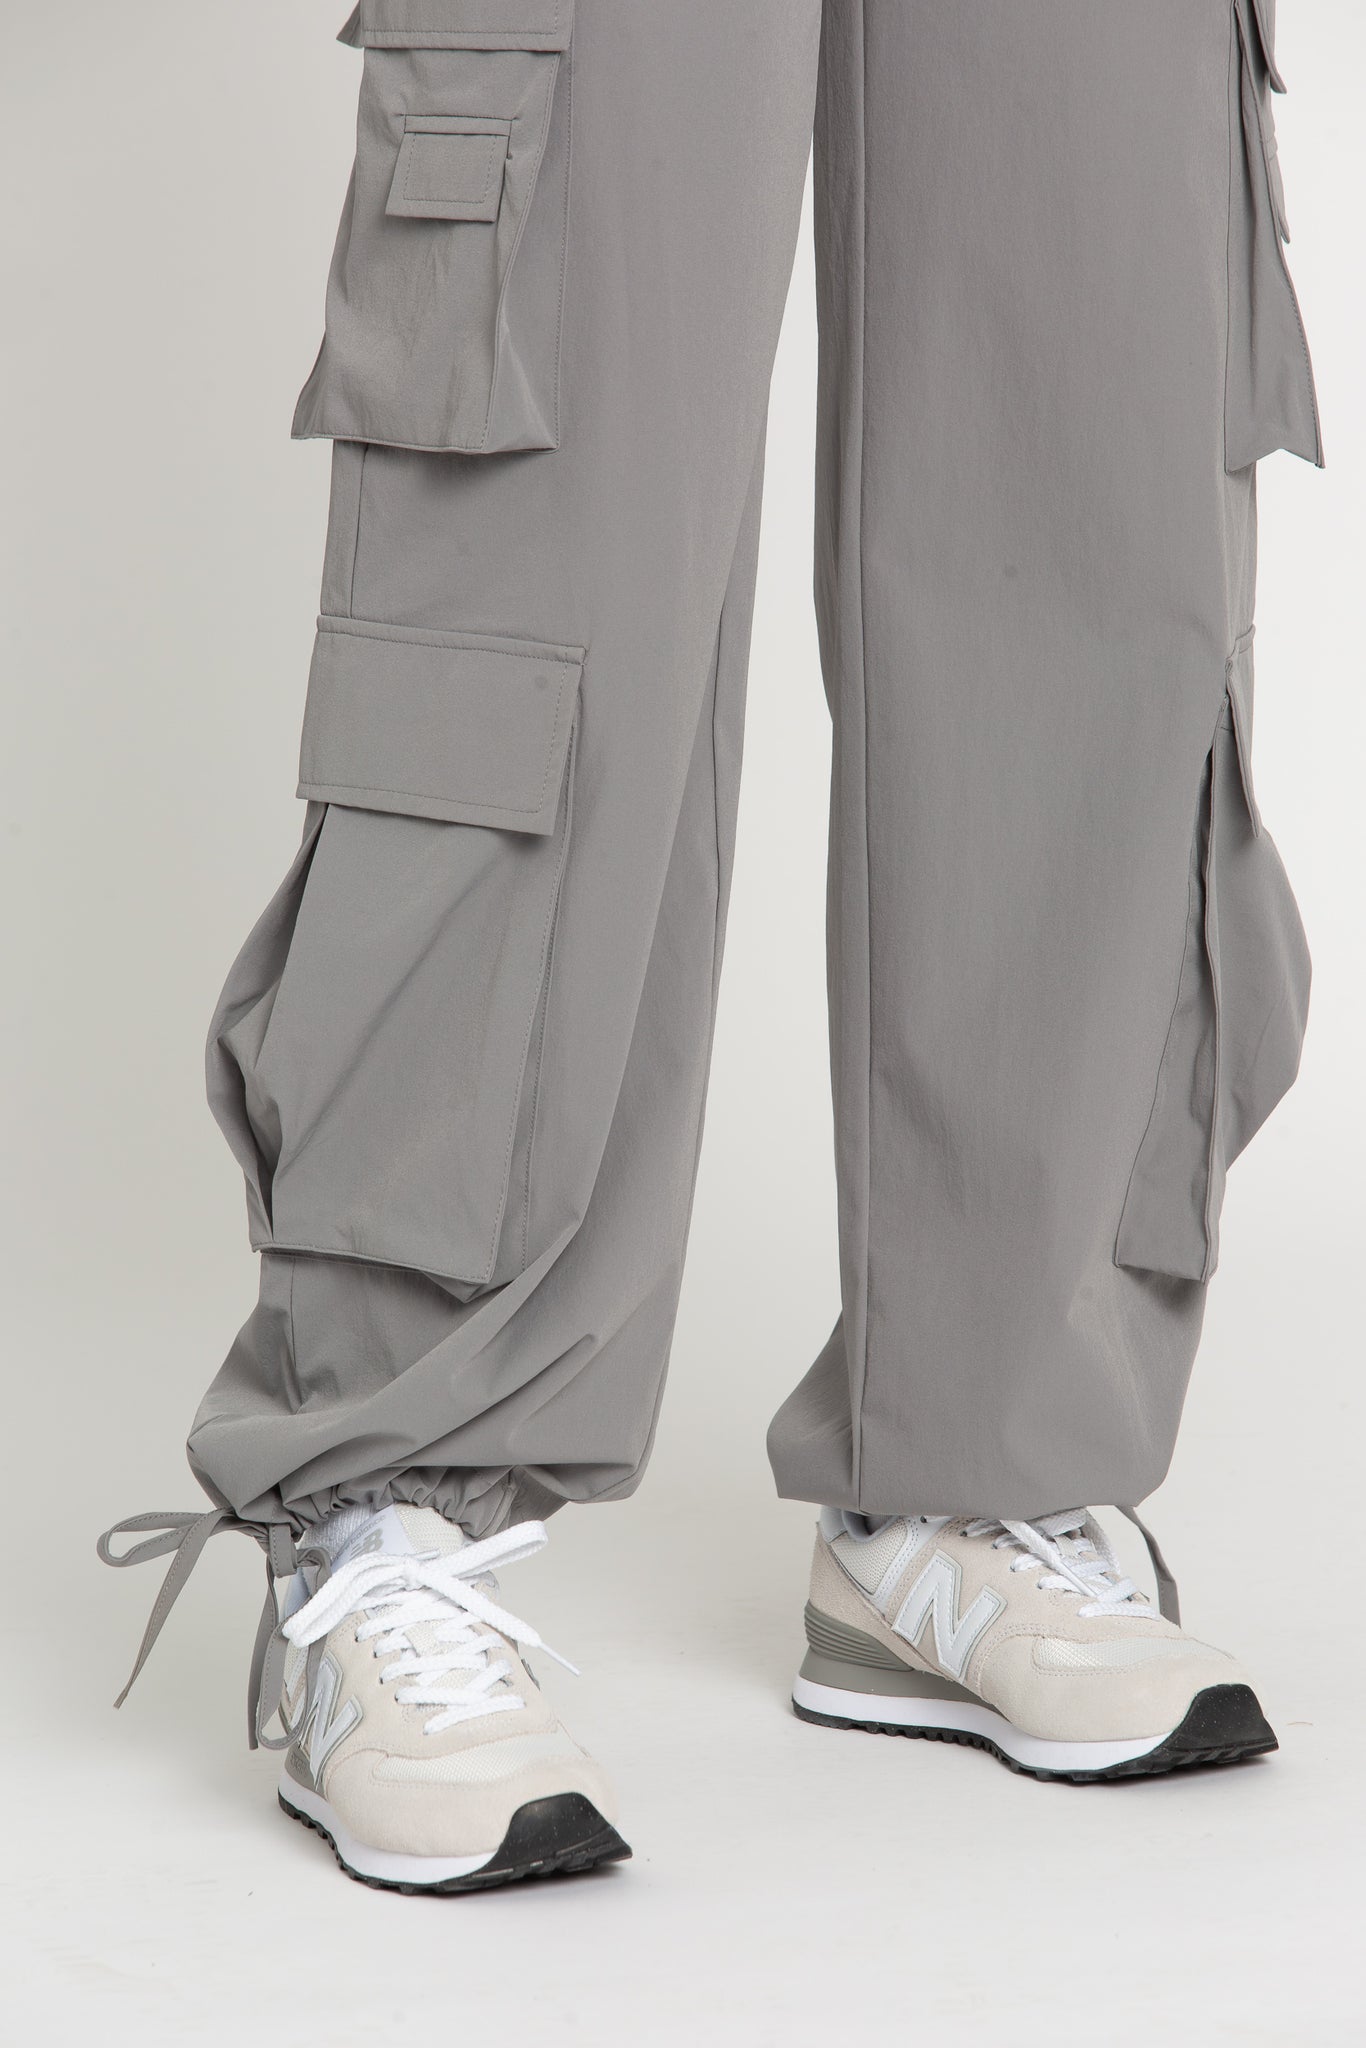 Dusty Grey Parachute Pants